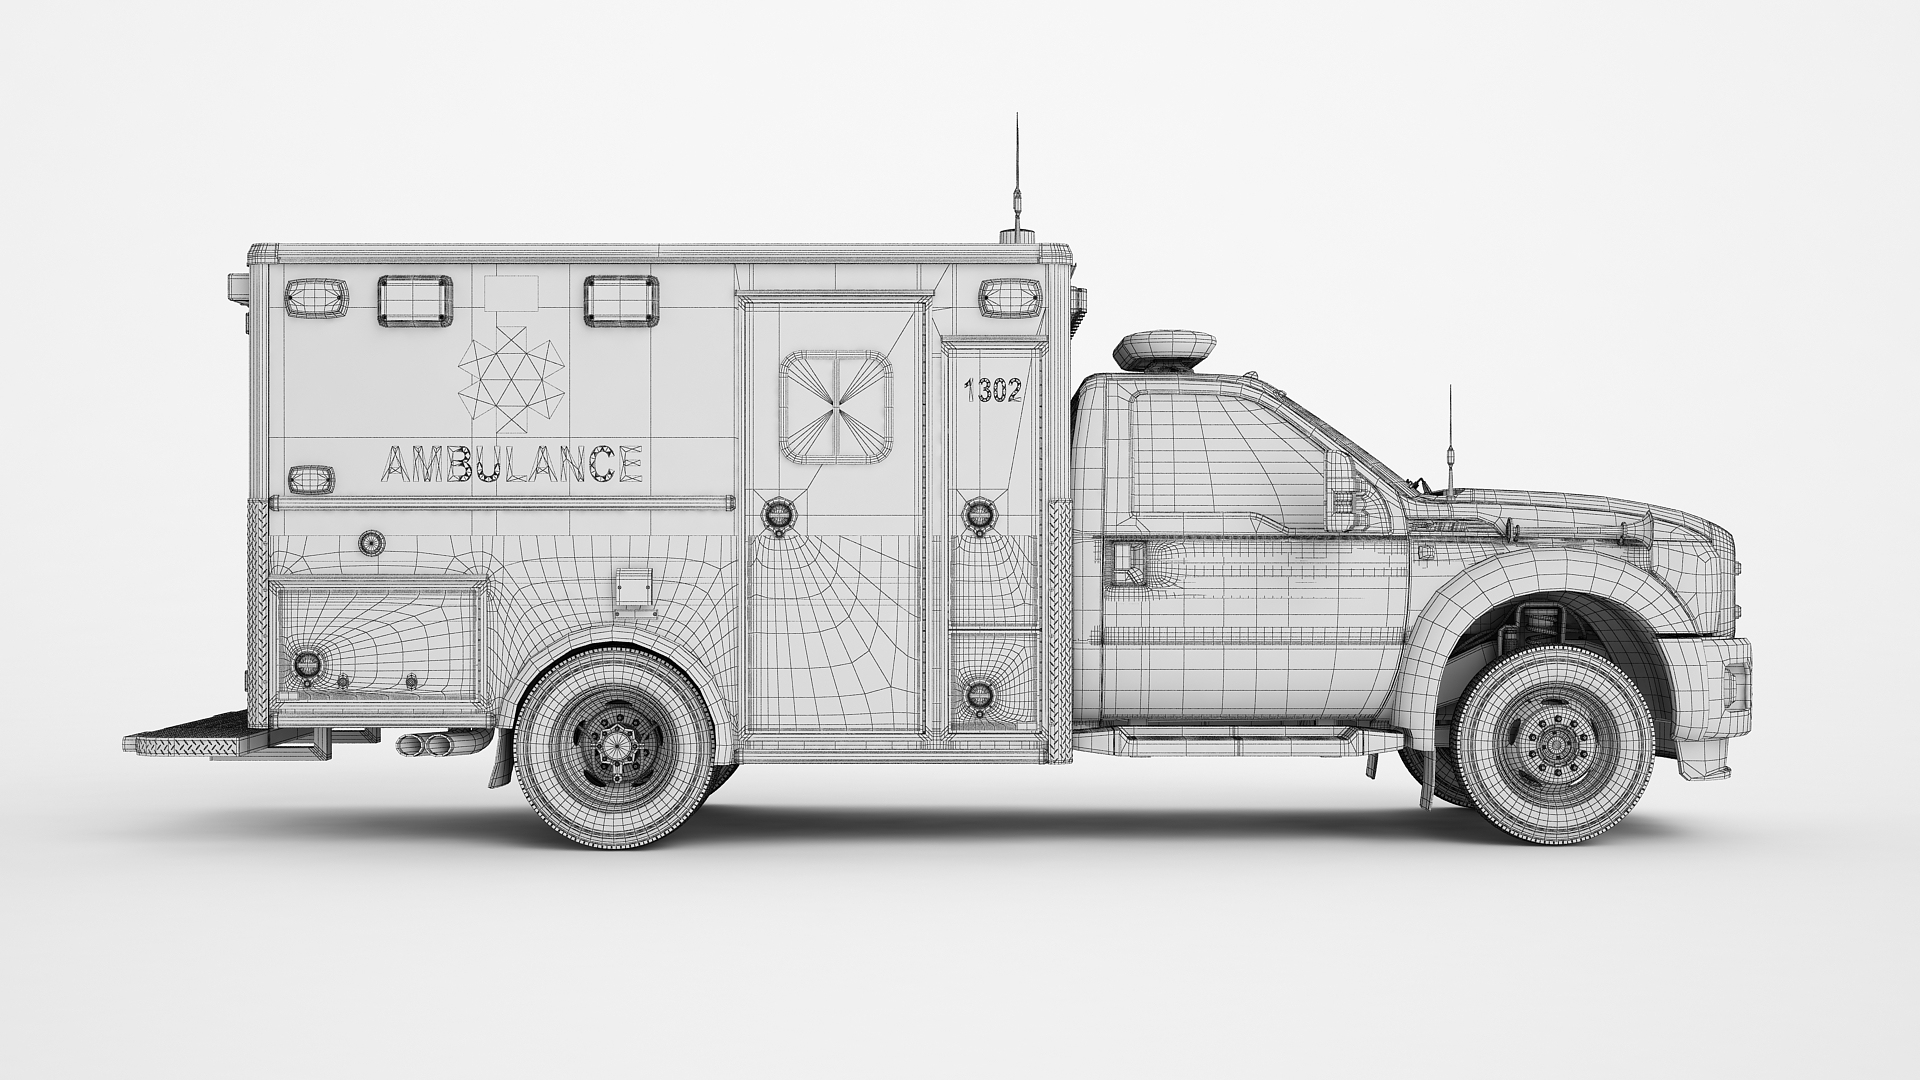 ford ambulance drawing